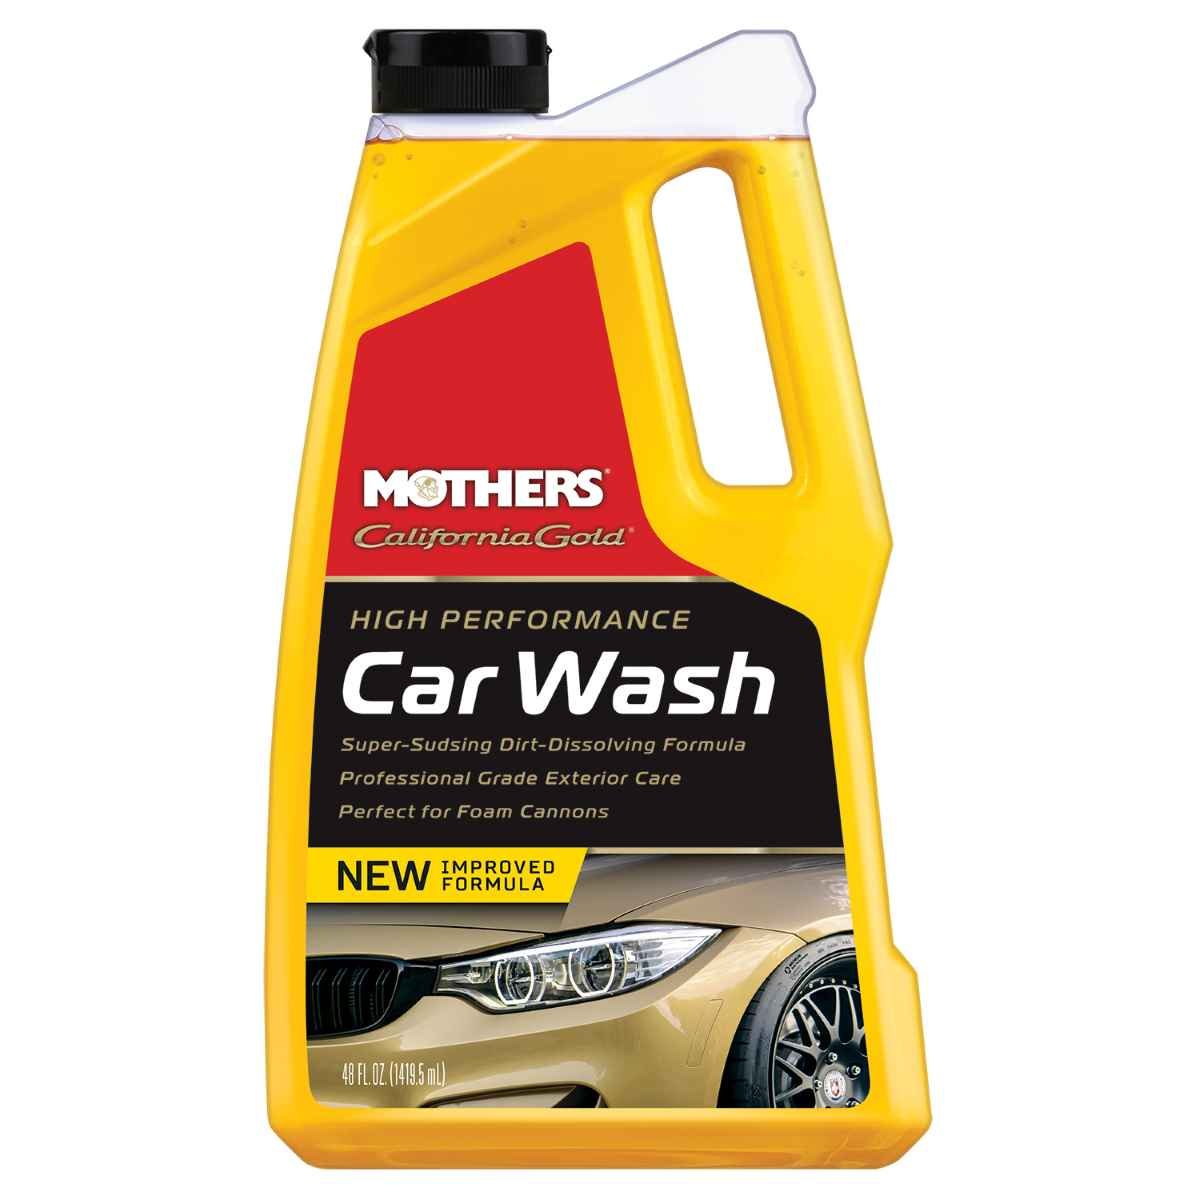 California Gold High Performance Car Wash - 1420 ml